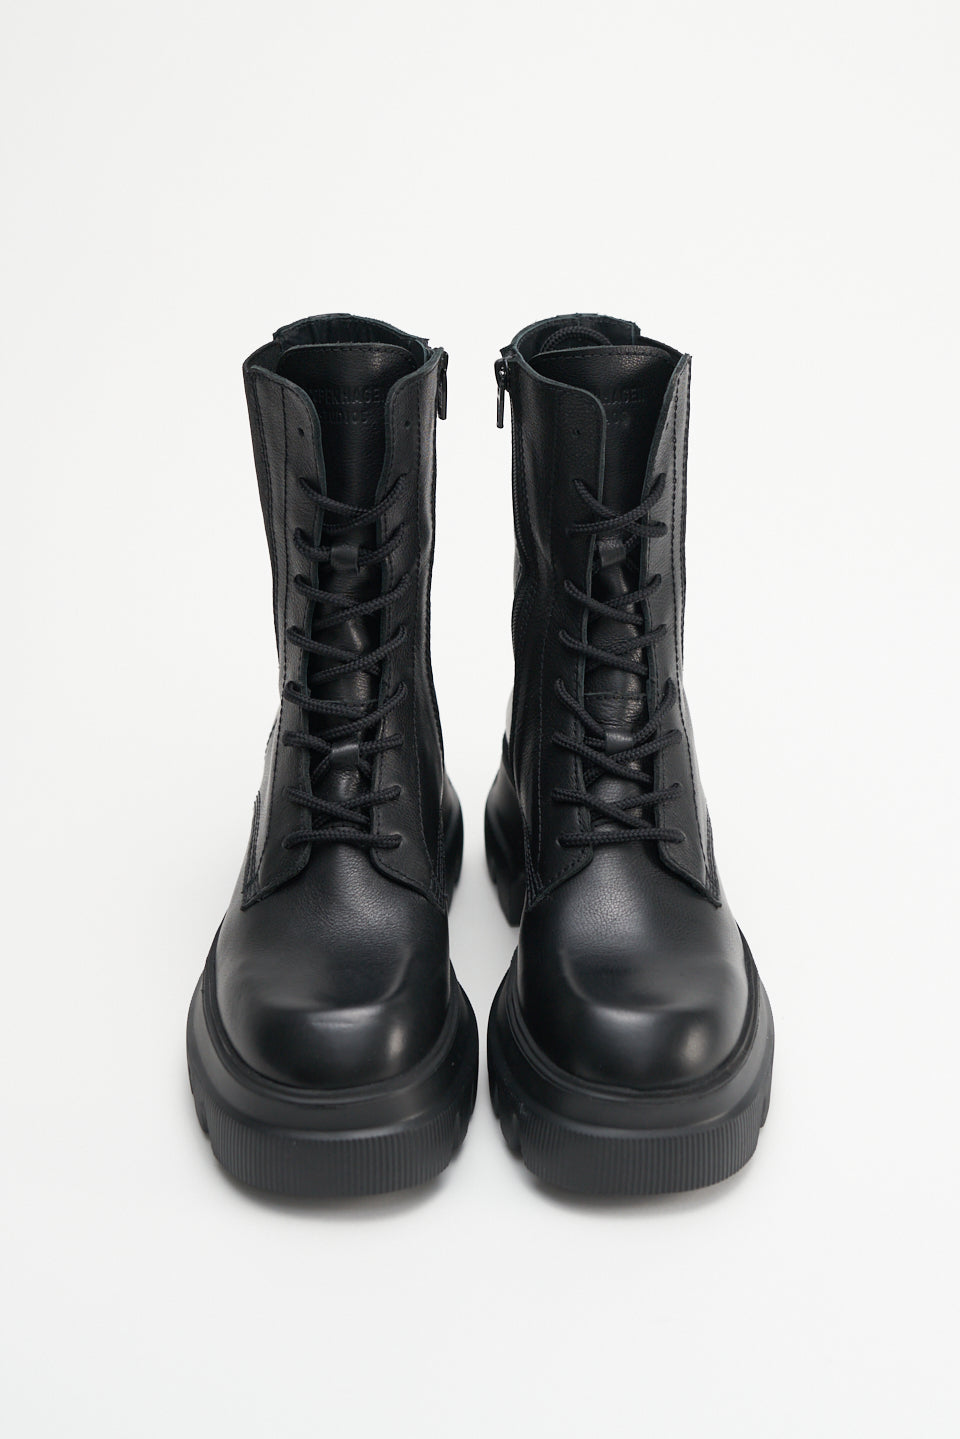 Vitello Black Combat Boots CPH169BLACK - 4